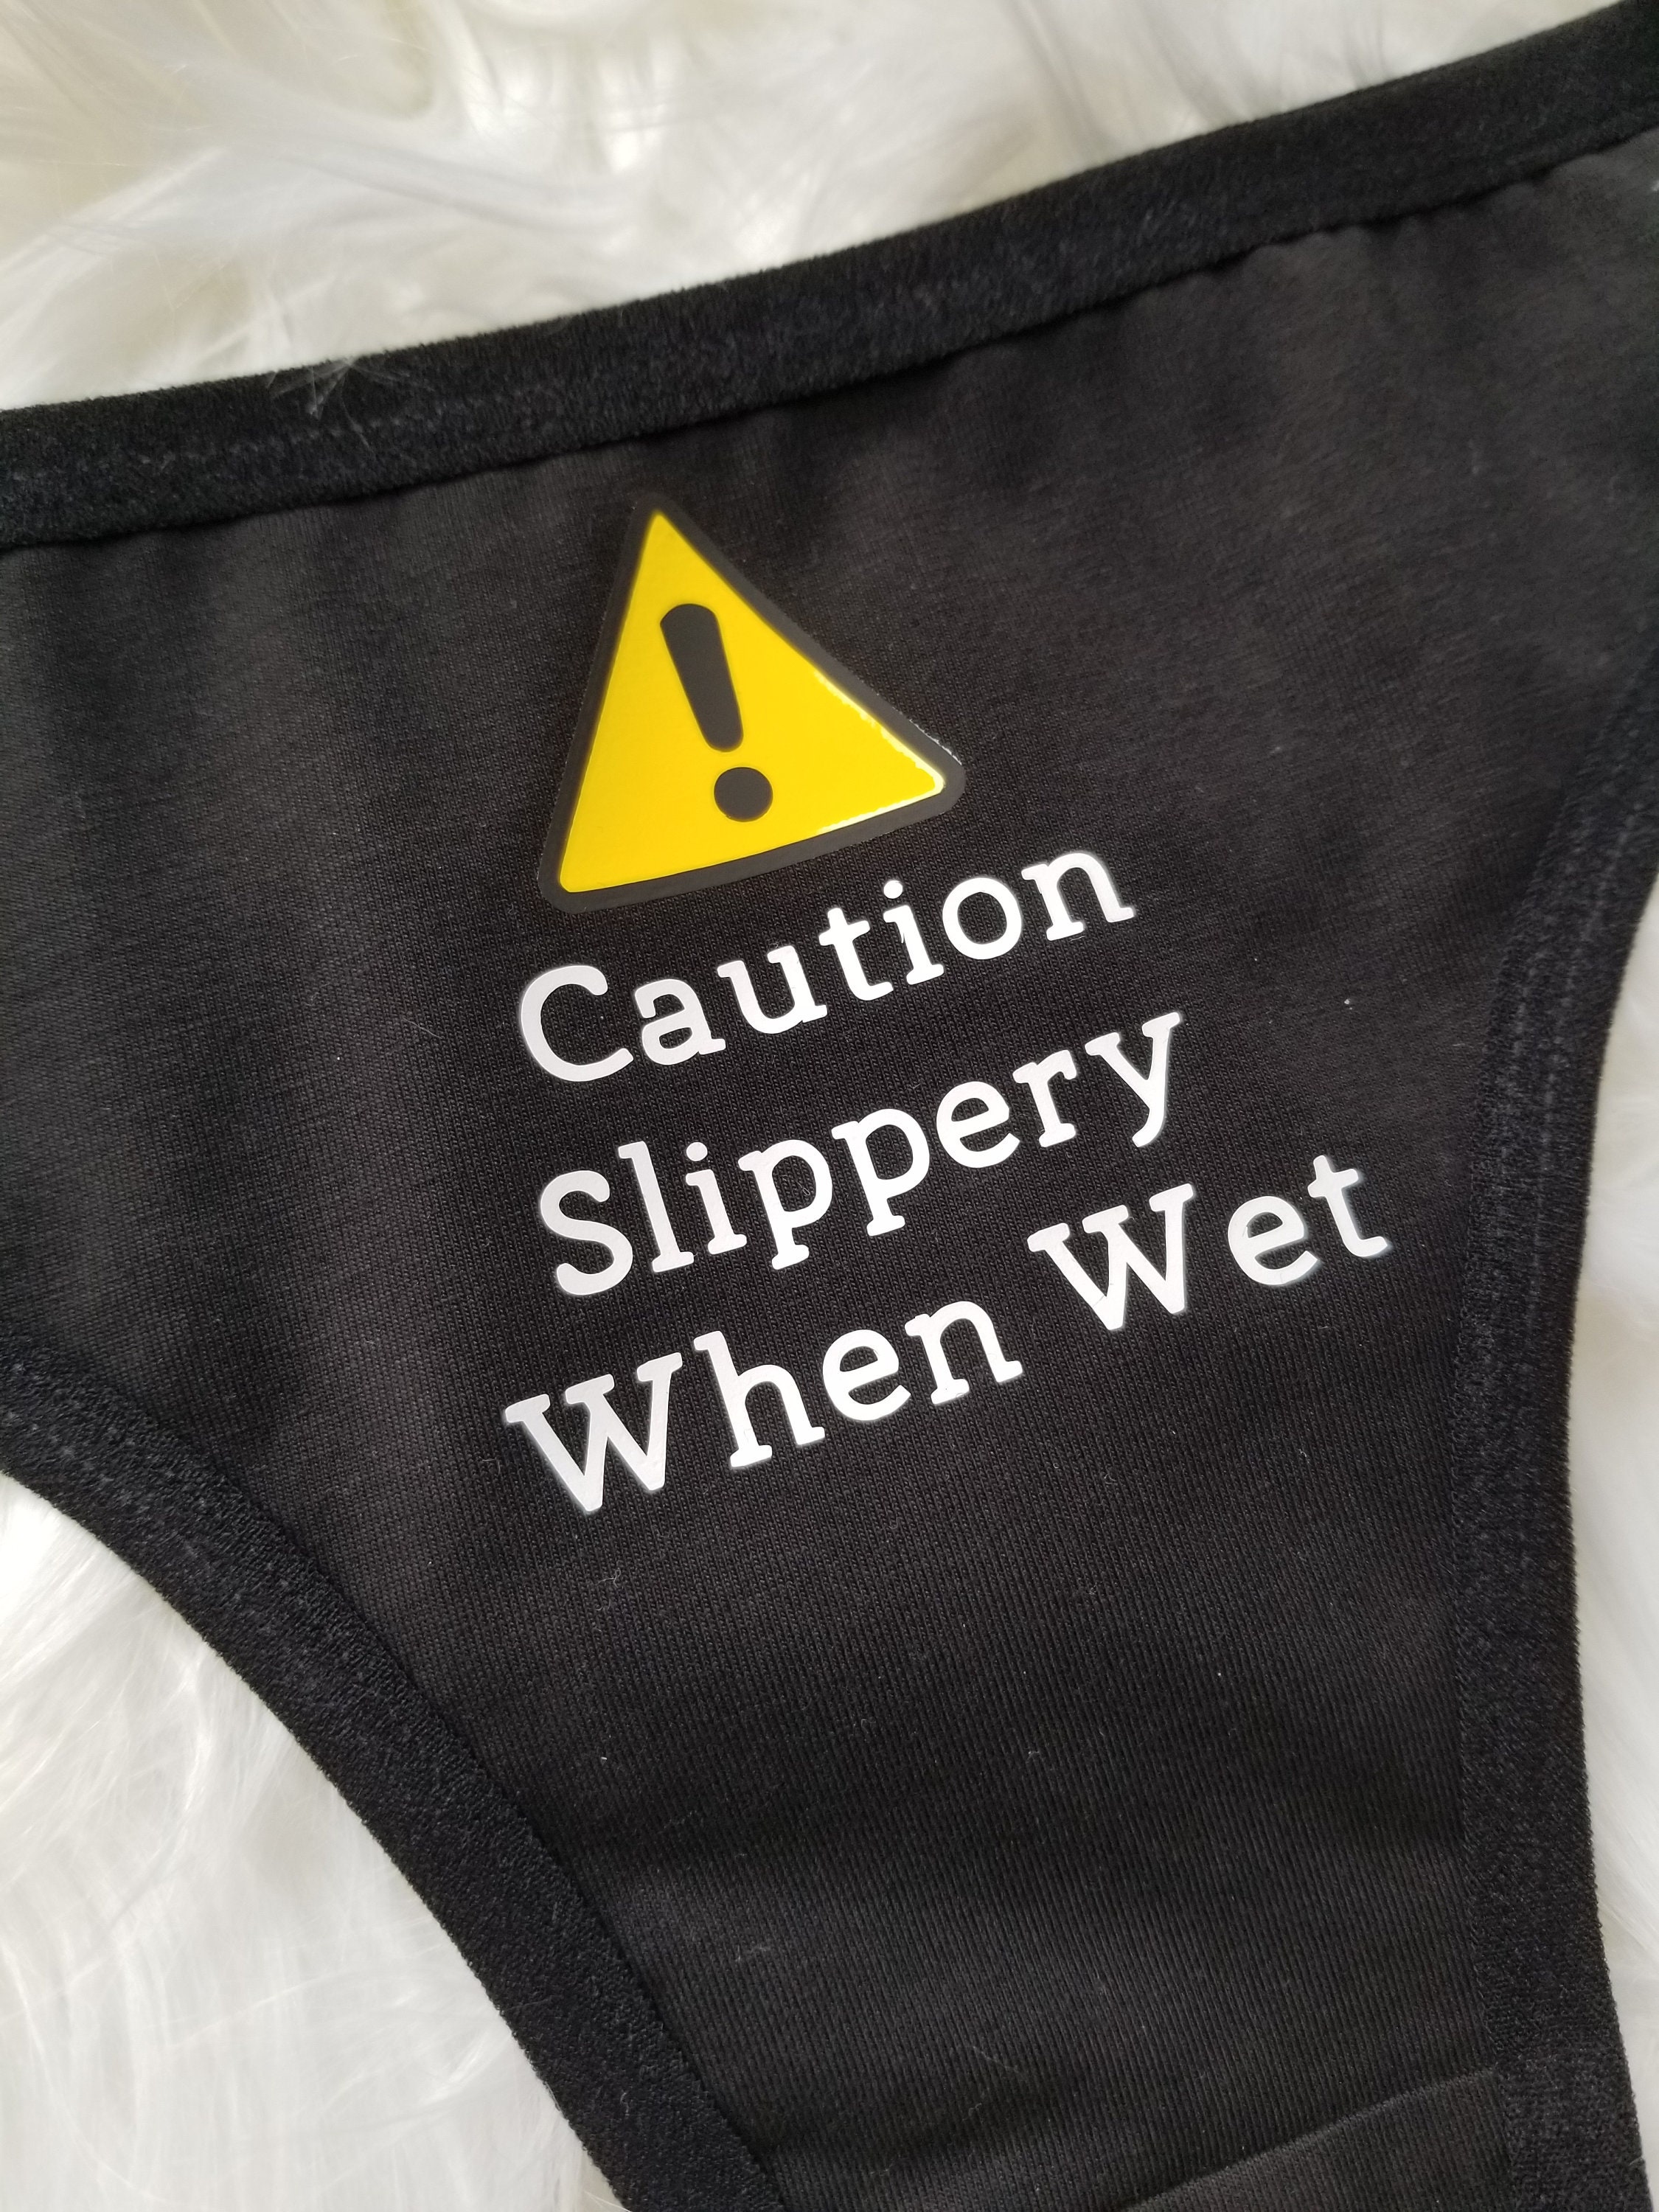 Caution Slippery When Wet Thong or Bikini Underwear, Bachelorette